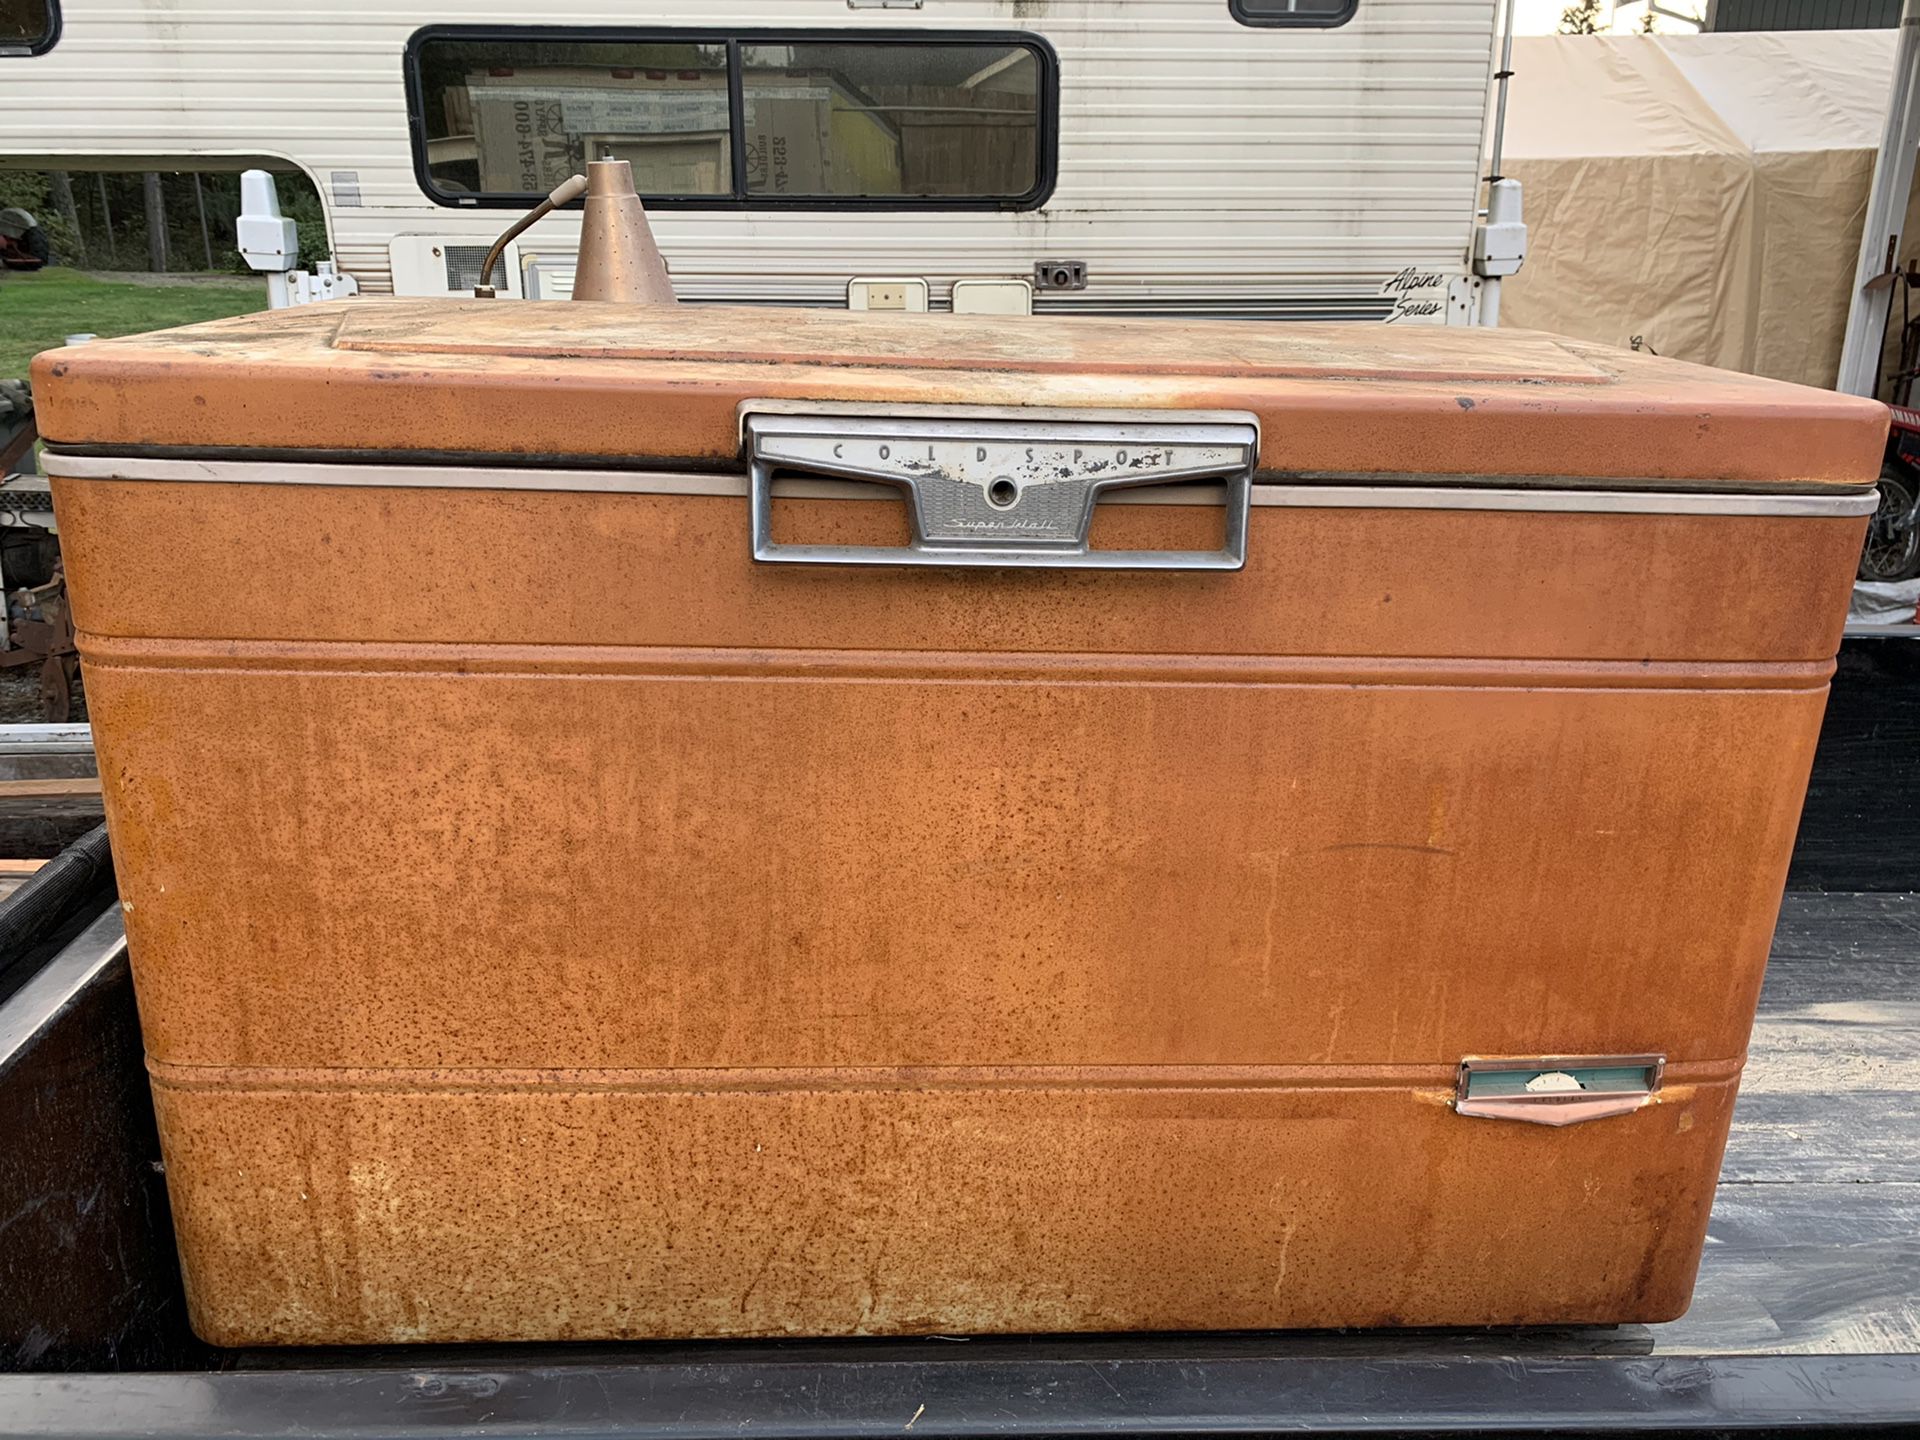 Vintage Coldspot chest freezer